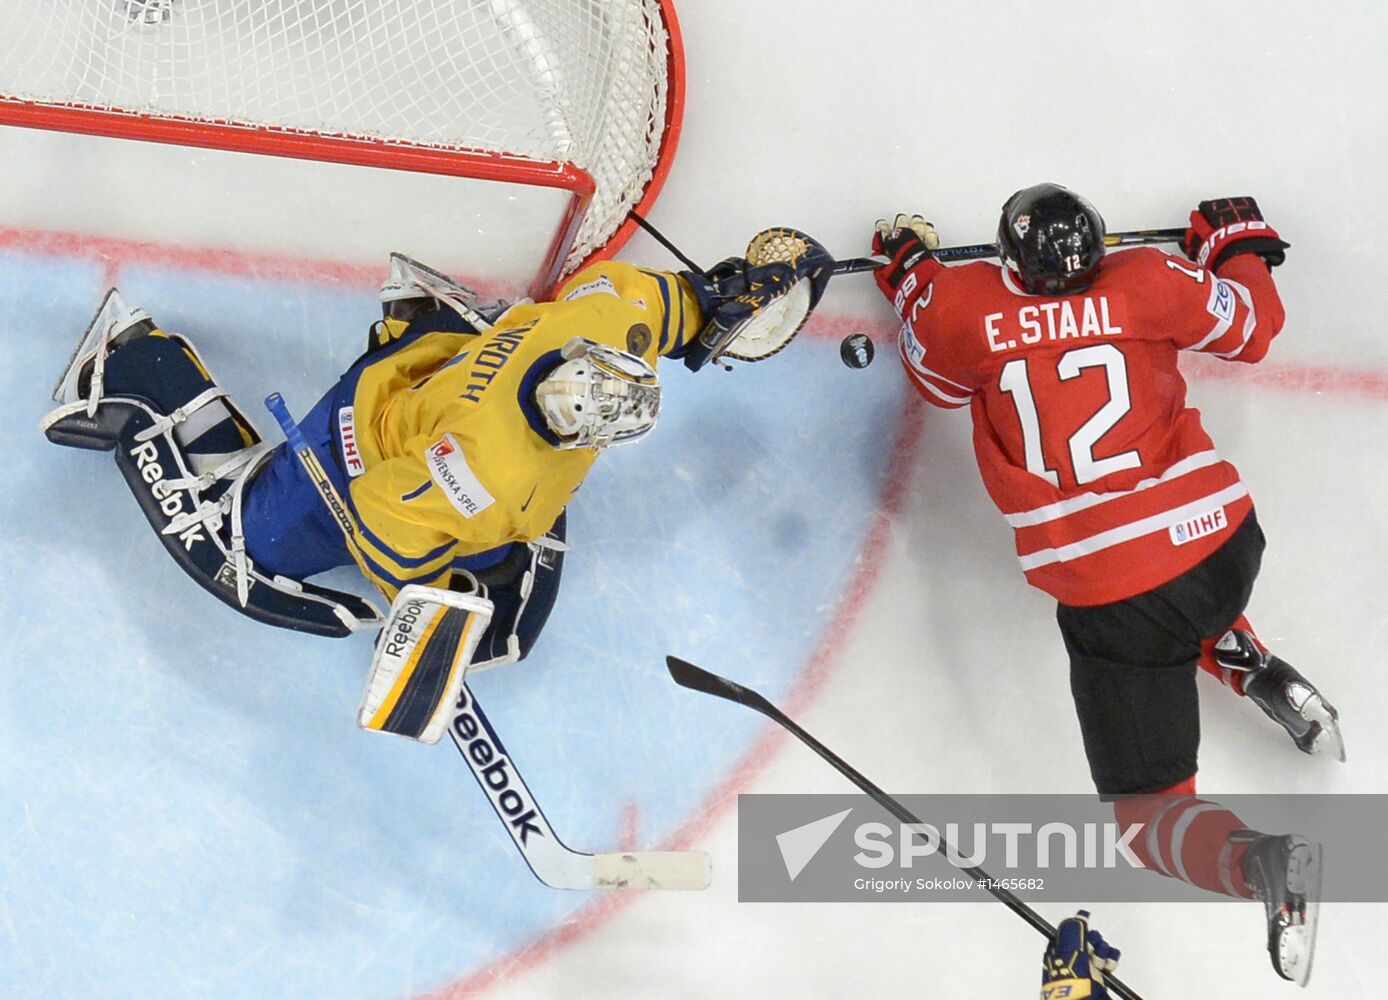 Ice Hockey World Championship. Sweden vs. Canada